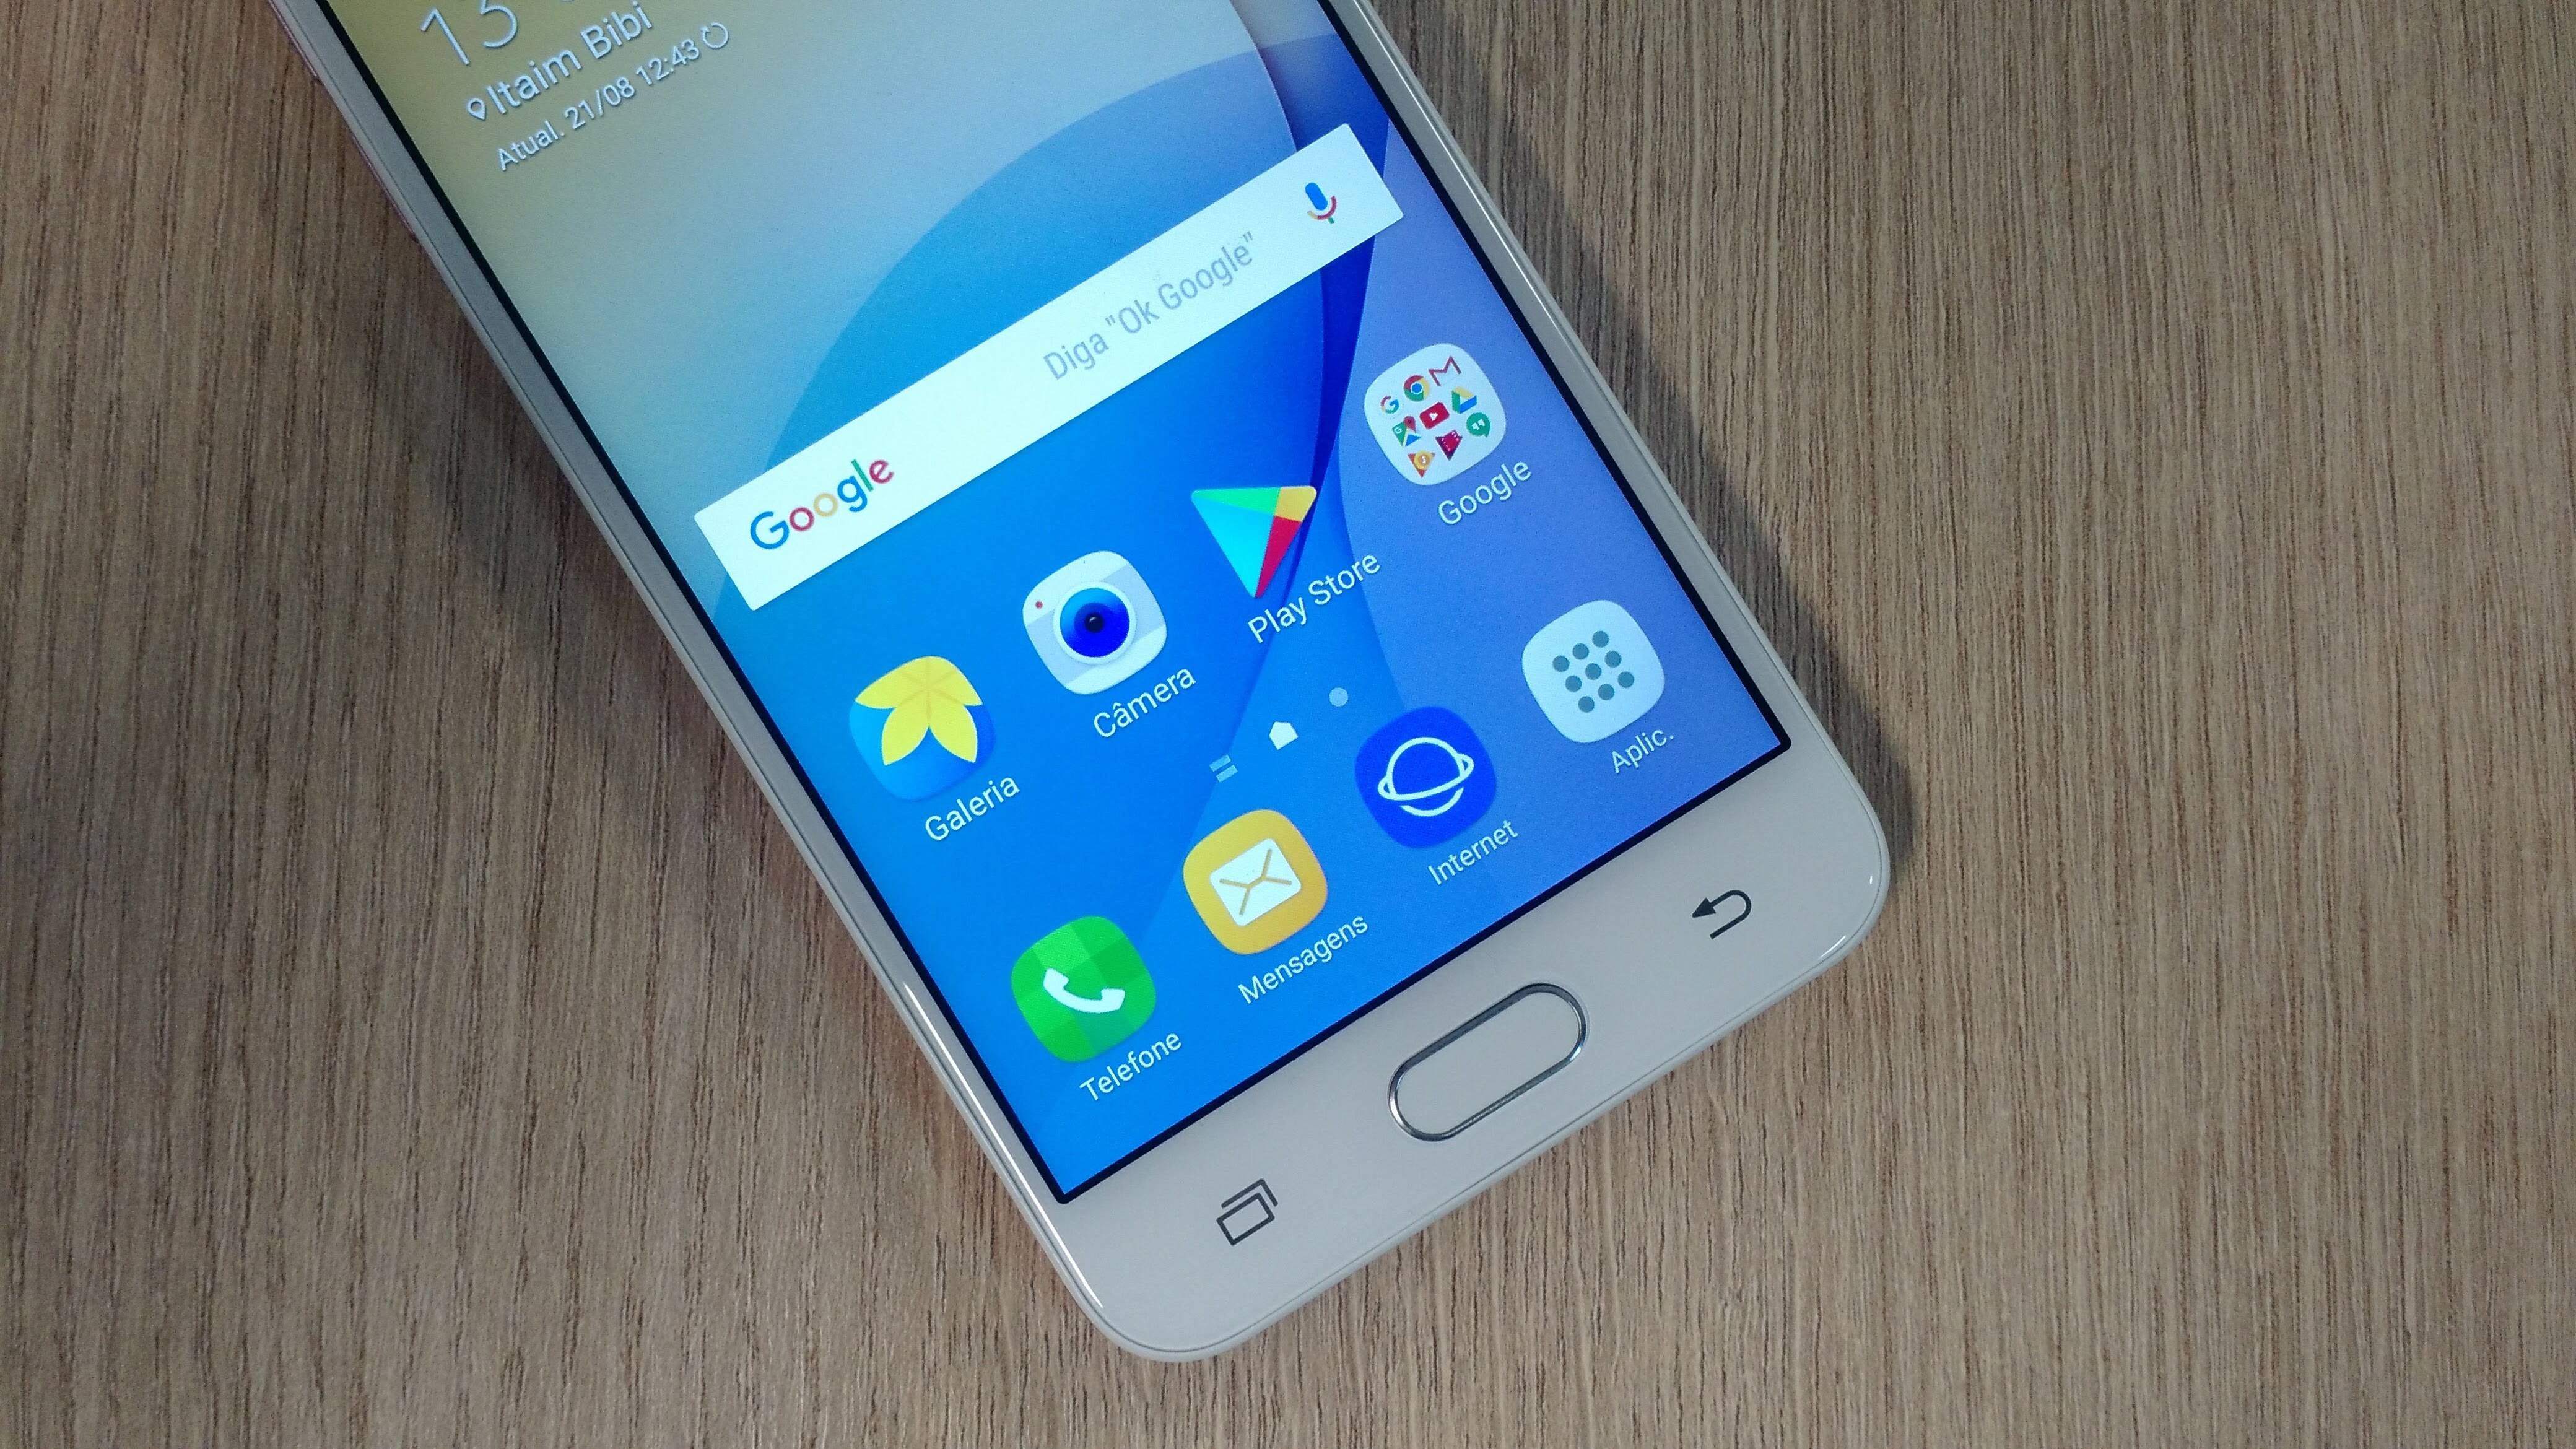 Galaxy J5 Prime vem instalado com Android 6.0.1 Marshmallow adaptado à interface da Samsung. Foto: Victor Hugo Silva/Brasil Econômico